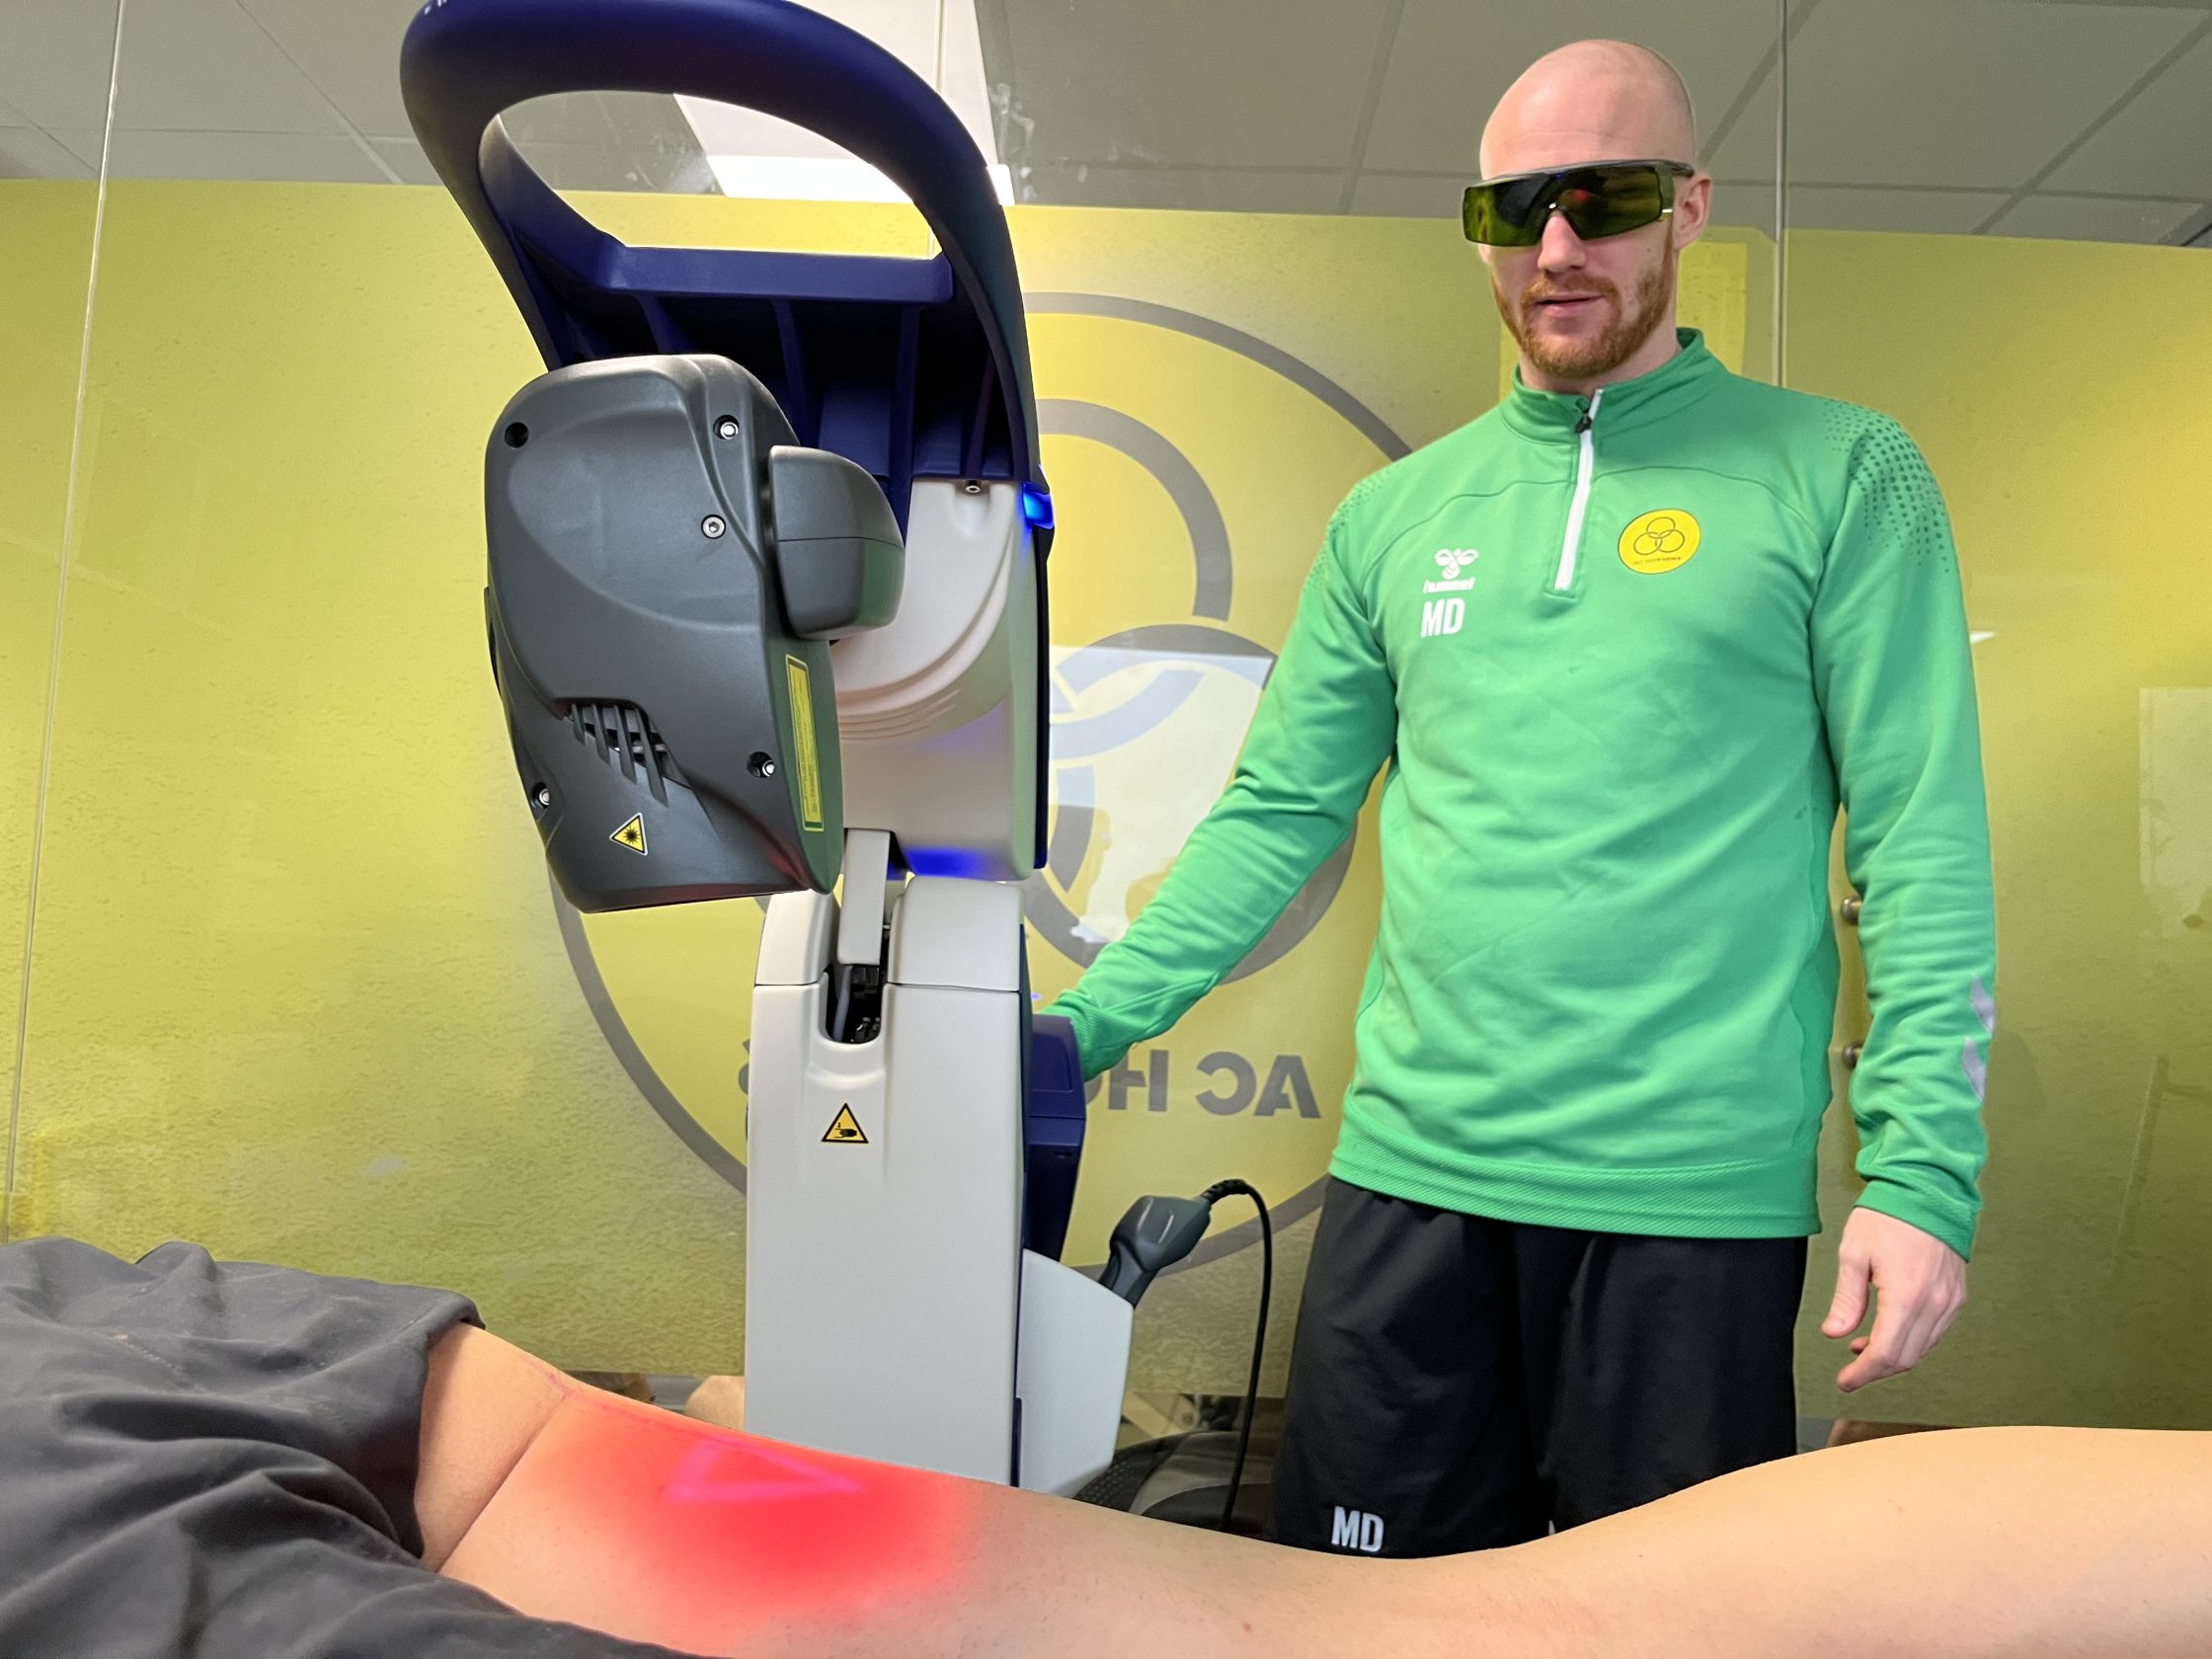 Fysioterapeut behandler fodboldspiller med en sportsskade med laserterapi